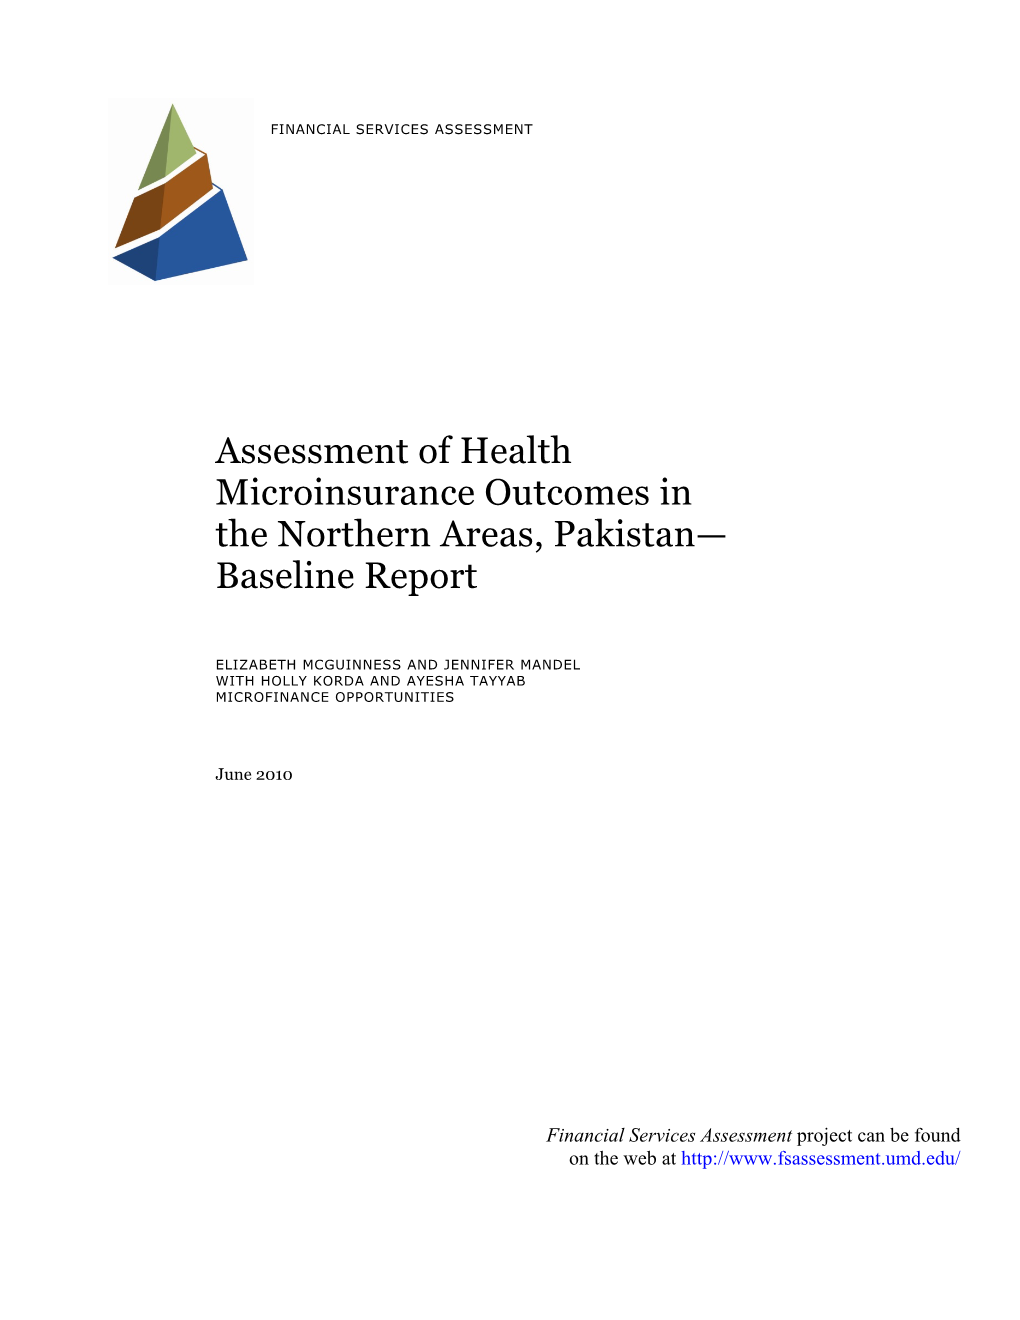 Assessment of Health Microinsurance